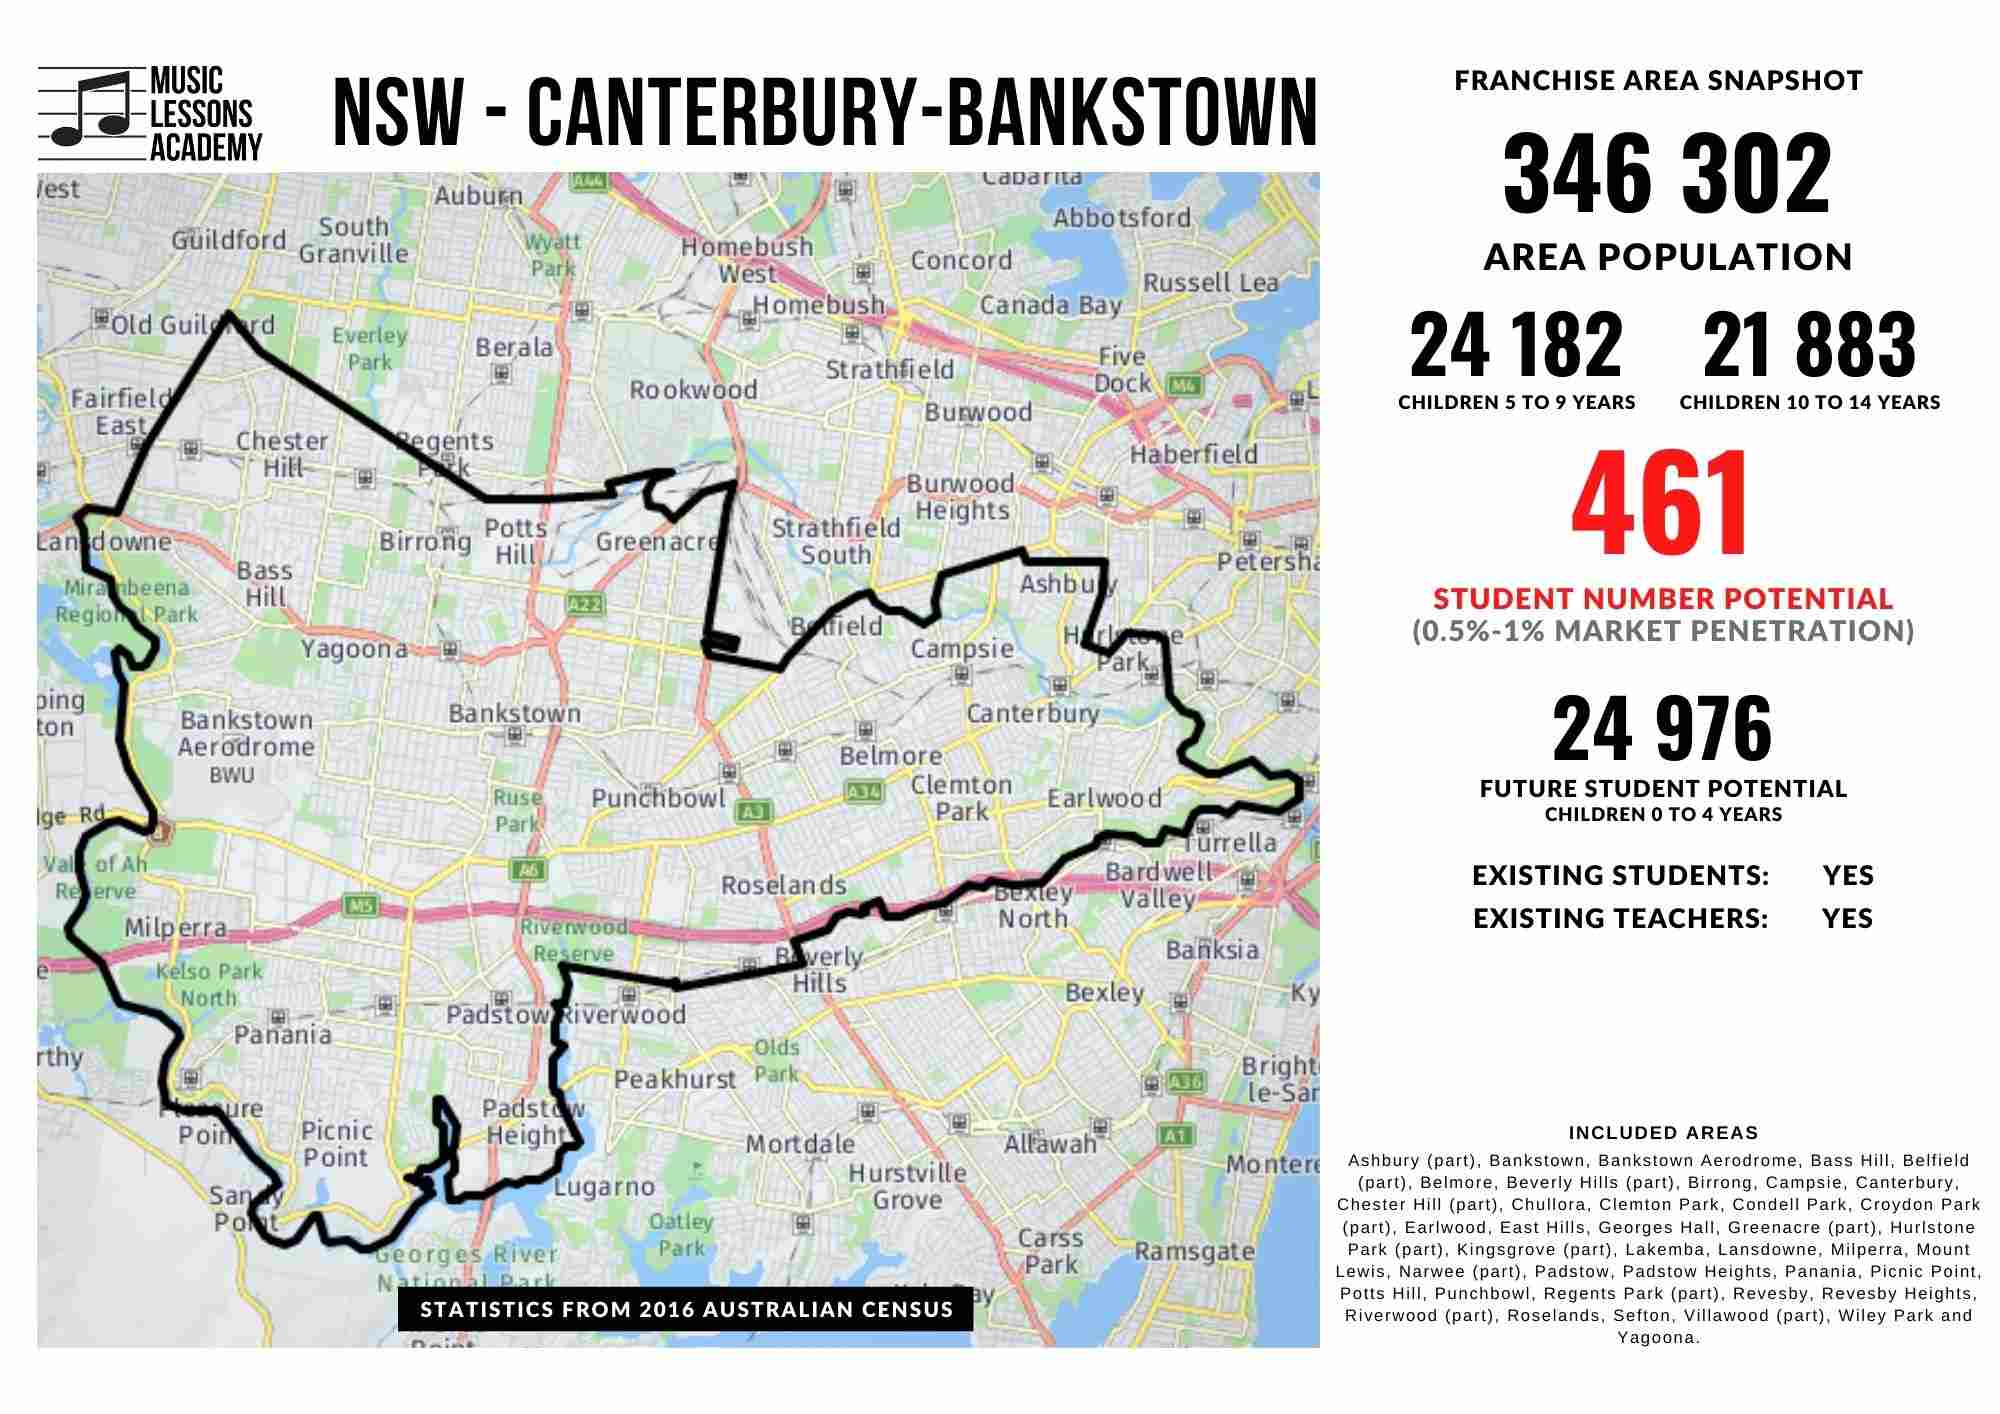 NSW Canterbury Bankstown Franchise for sale